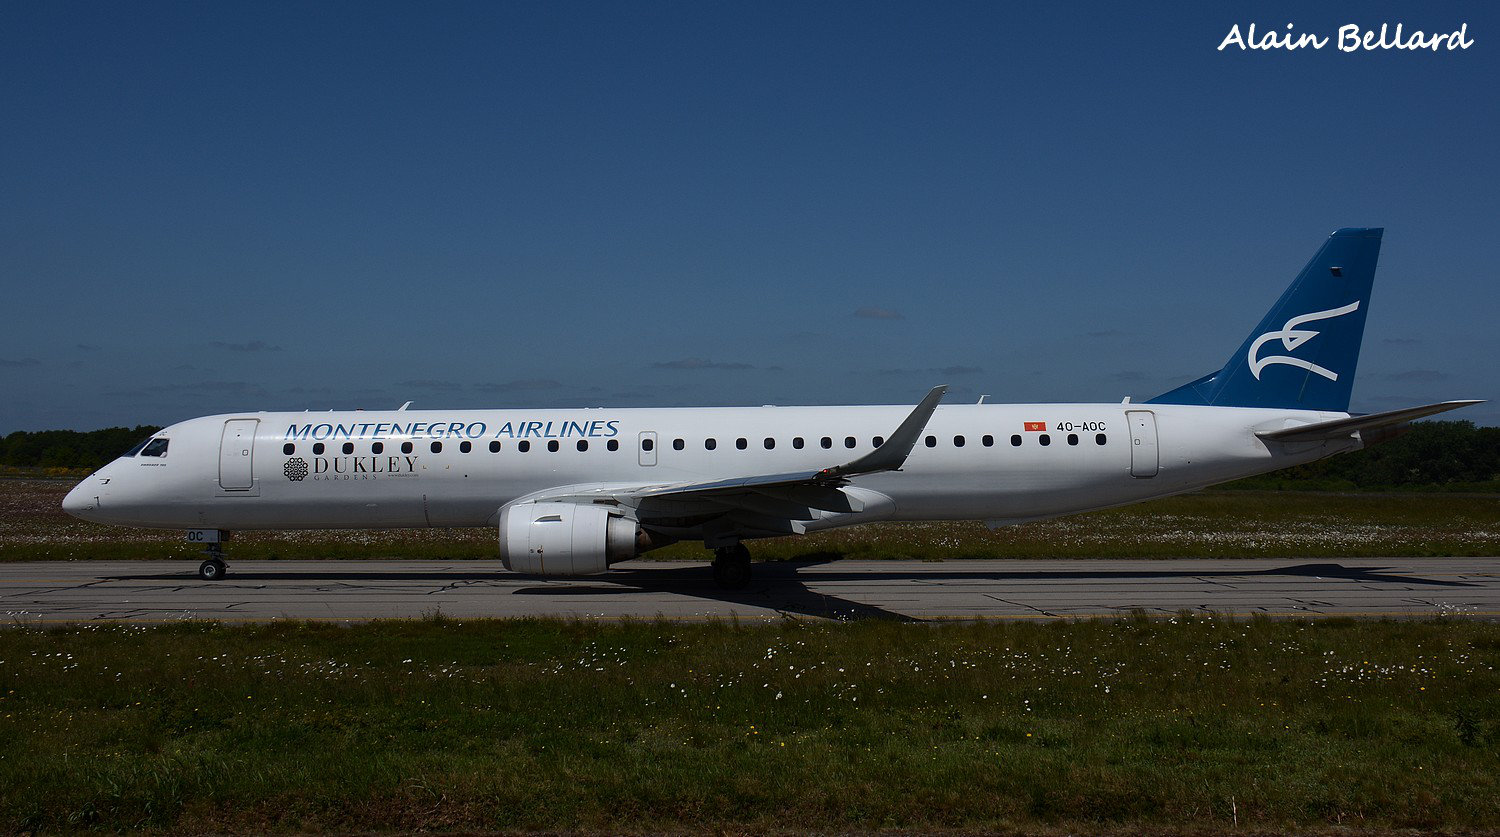 [17/05/2015] Embraer 190-200LR (4O-AOC) Montenegro Airlines "Dukley sticker" 8wzi